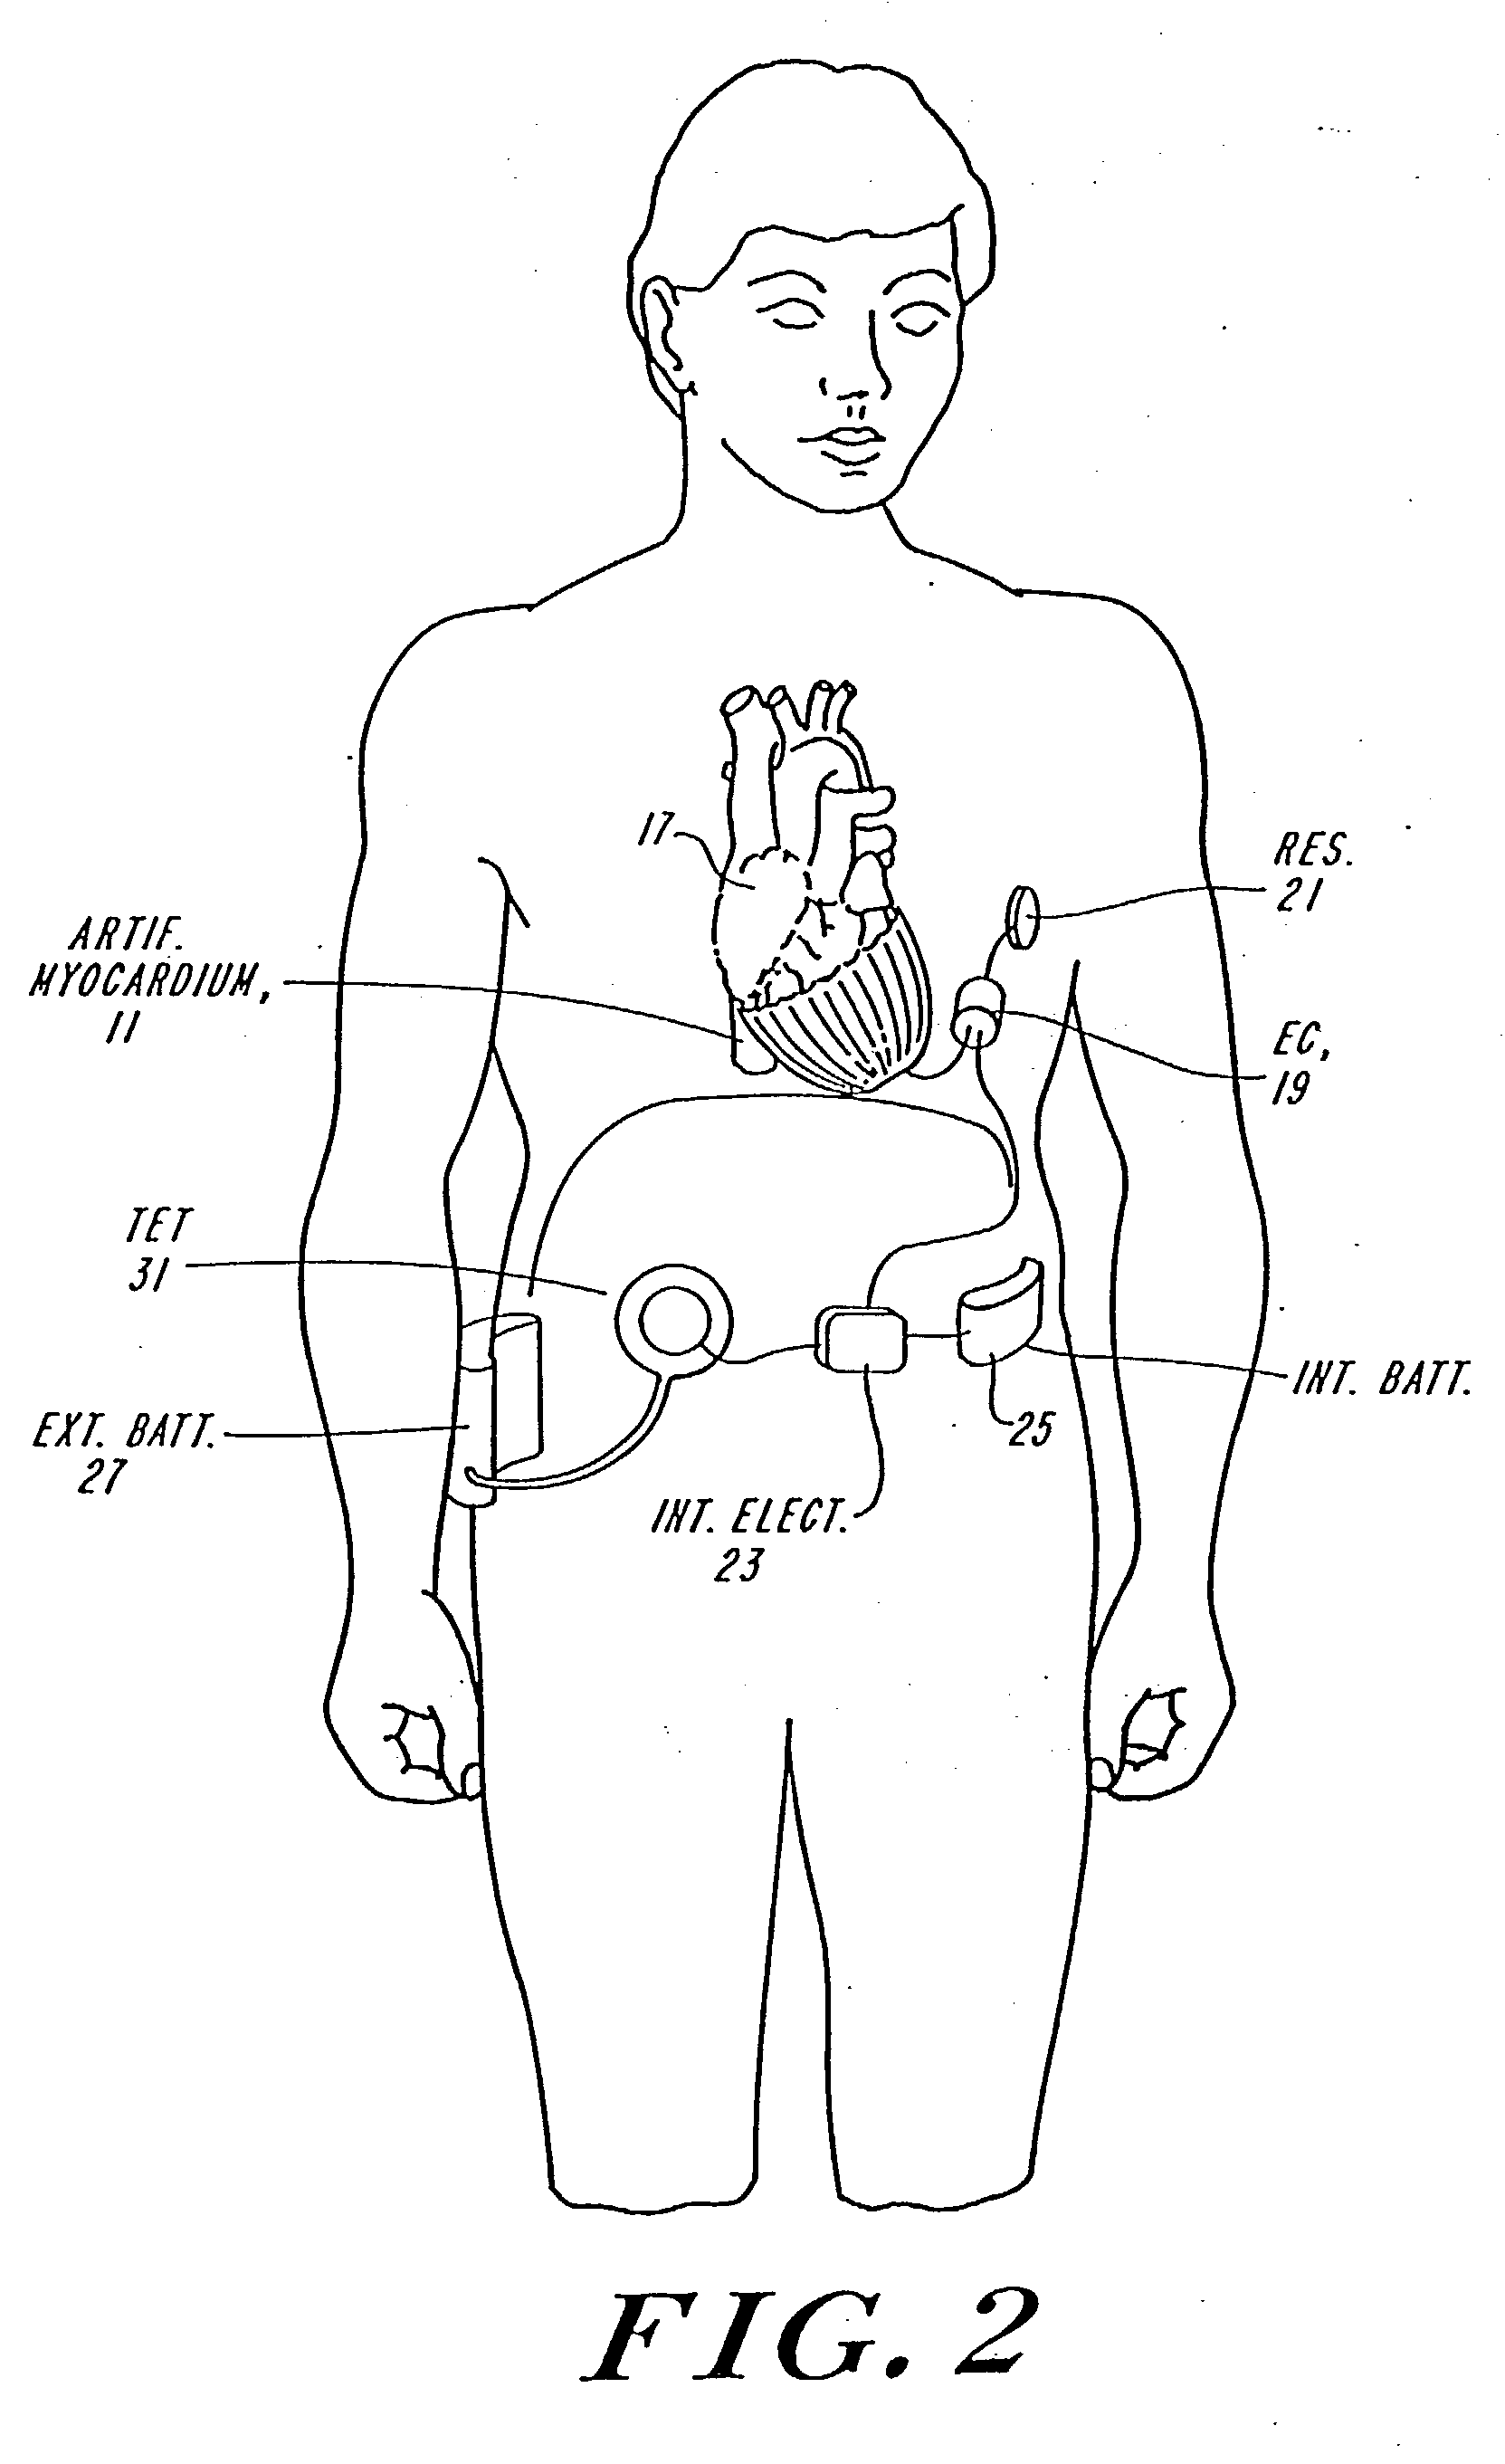 Passive cardiac assistance device